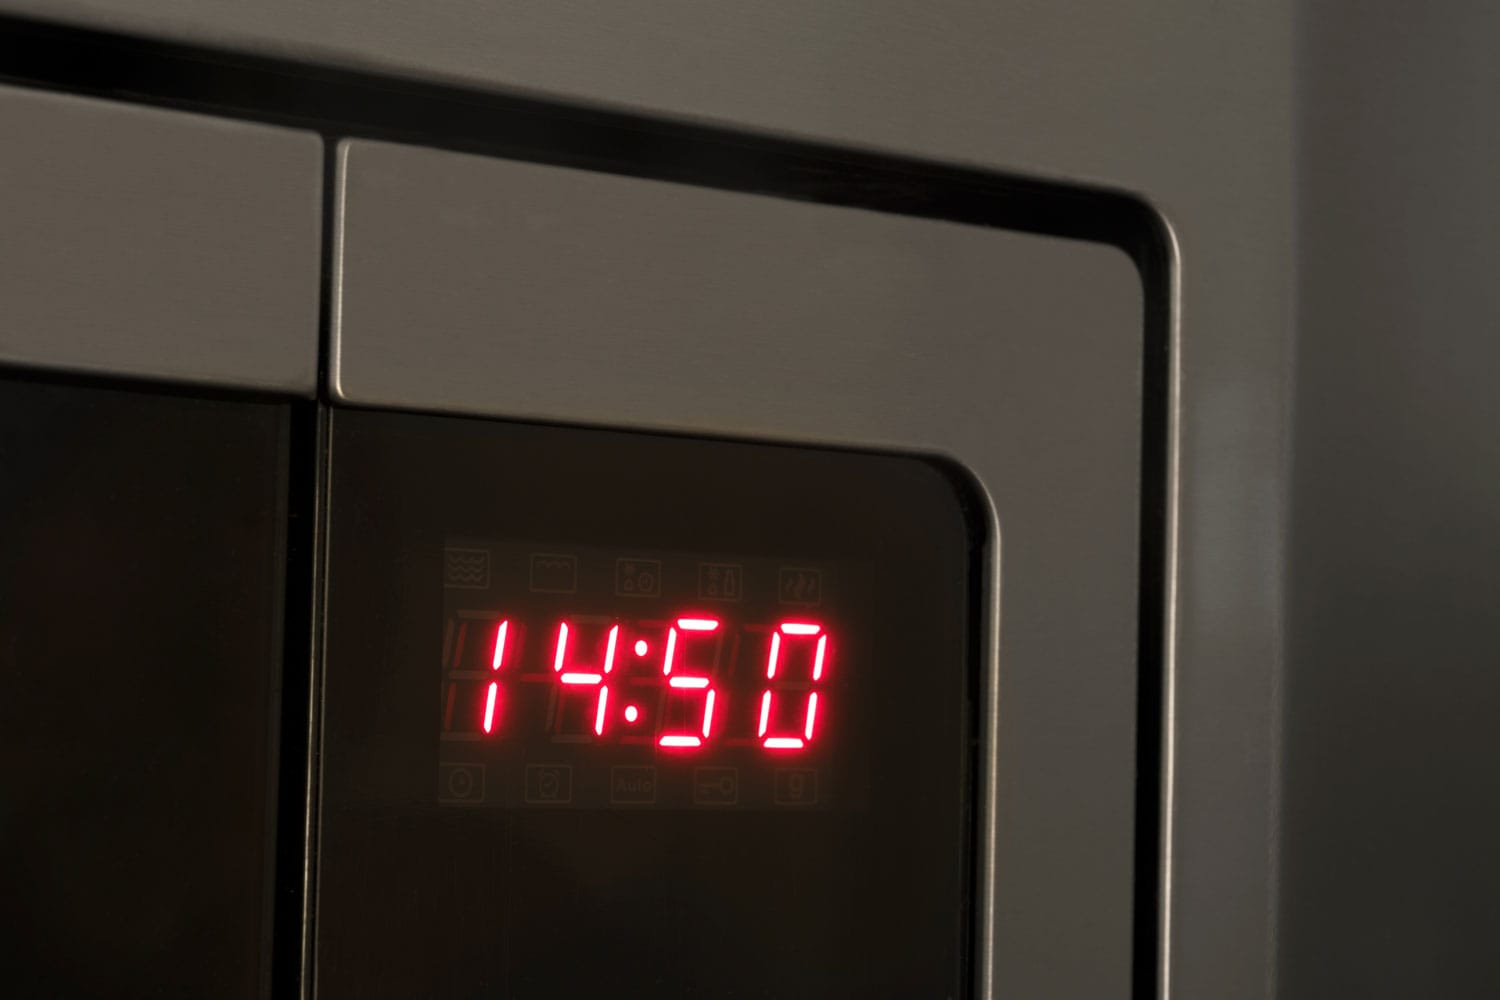 Digital Panasonic microwave clock
